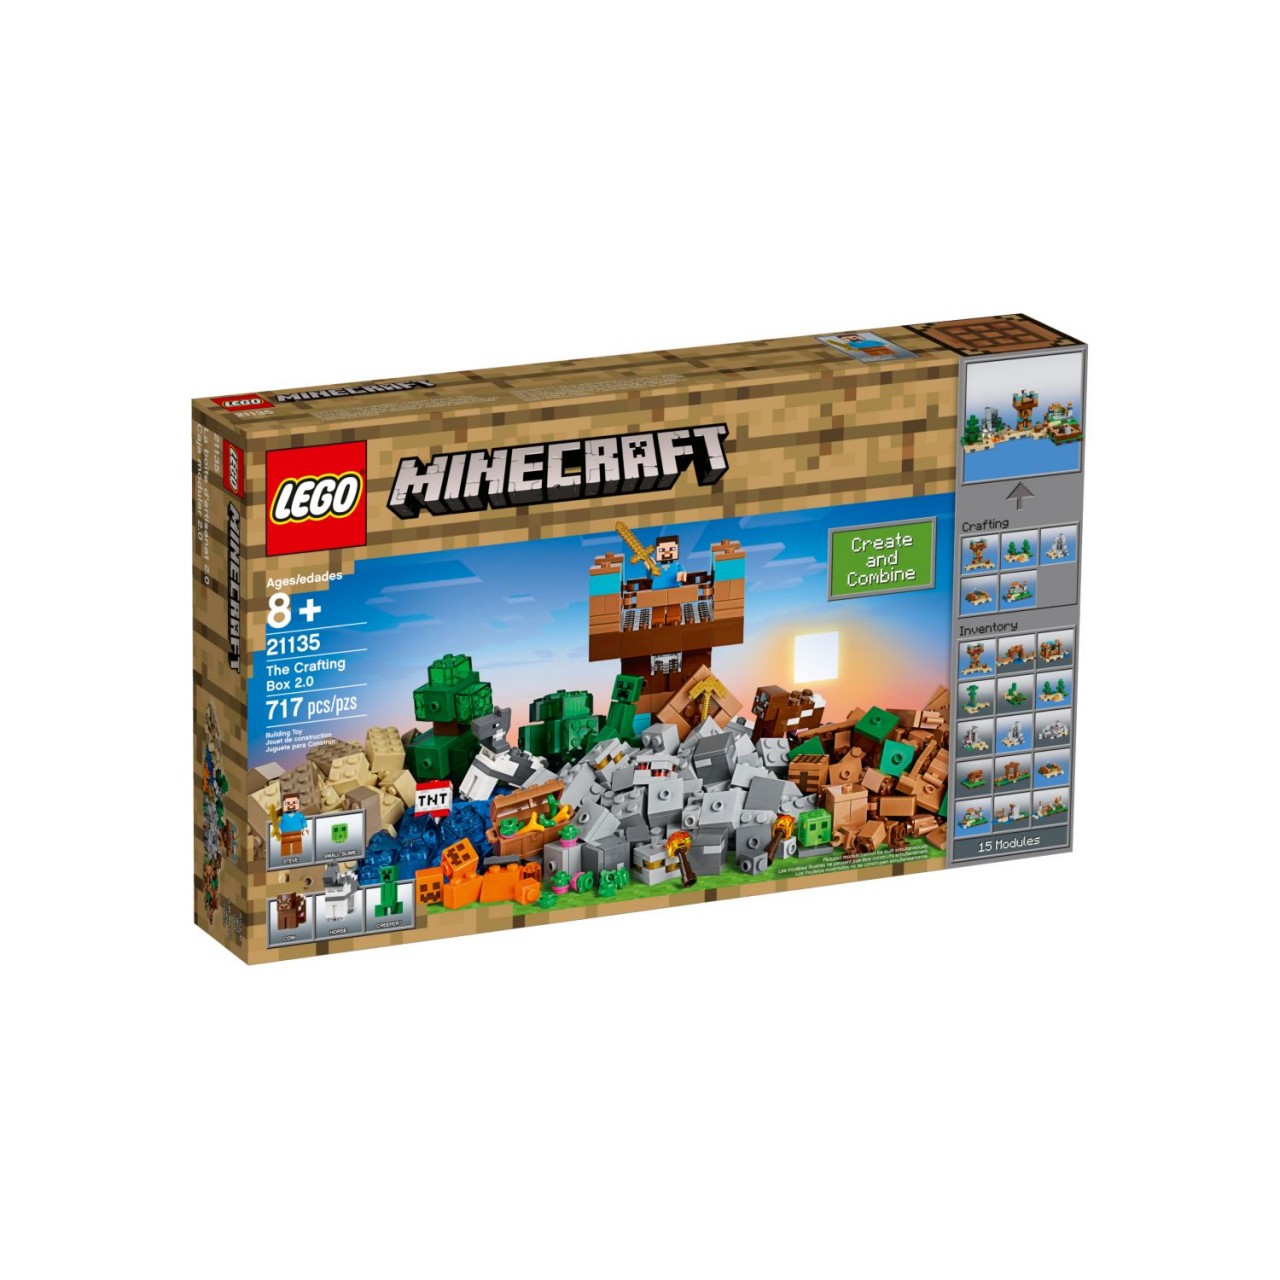 LEGO MINECRAFT 21135 Die Crafting-Box 2.0